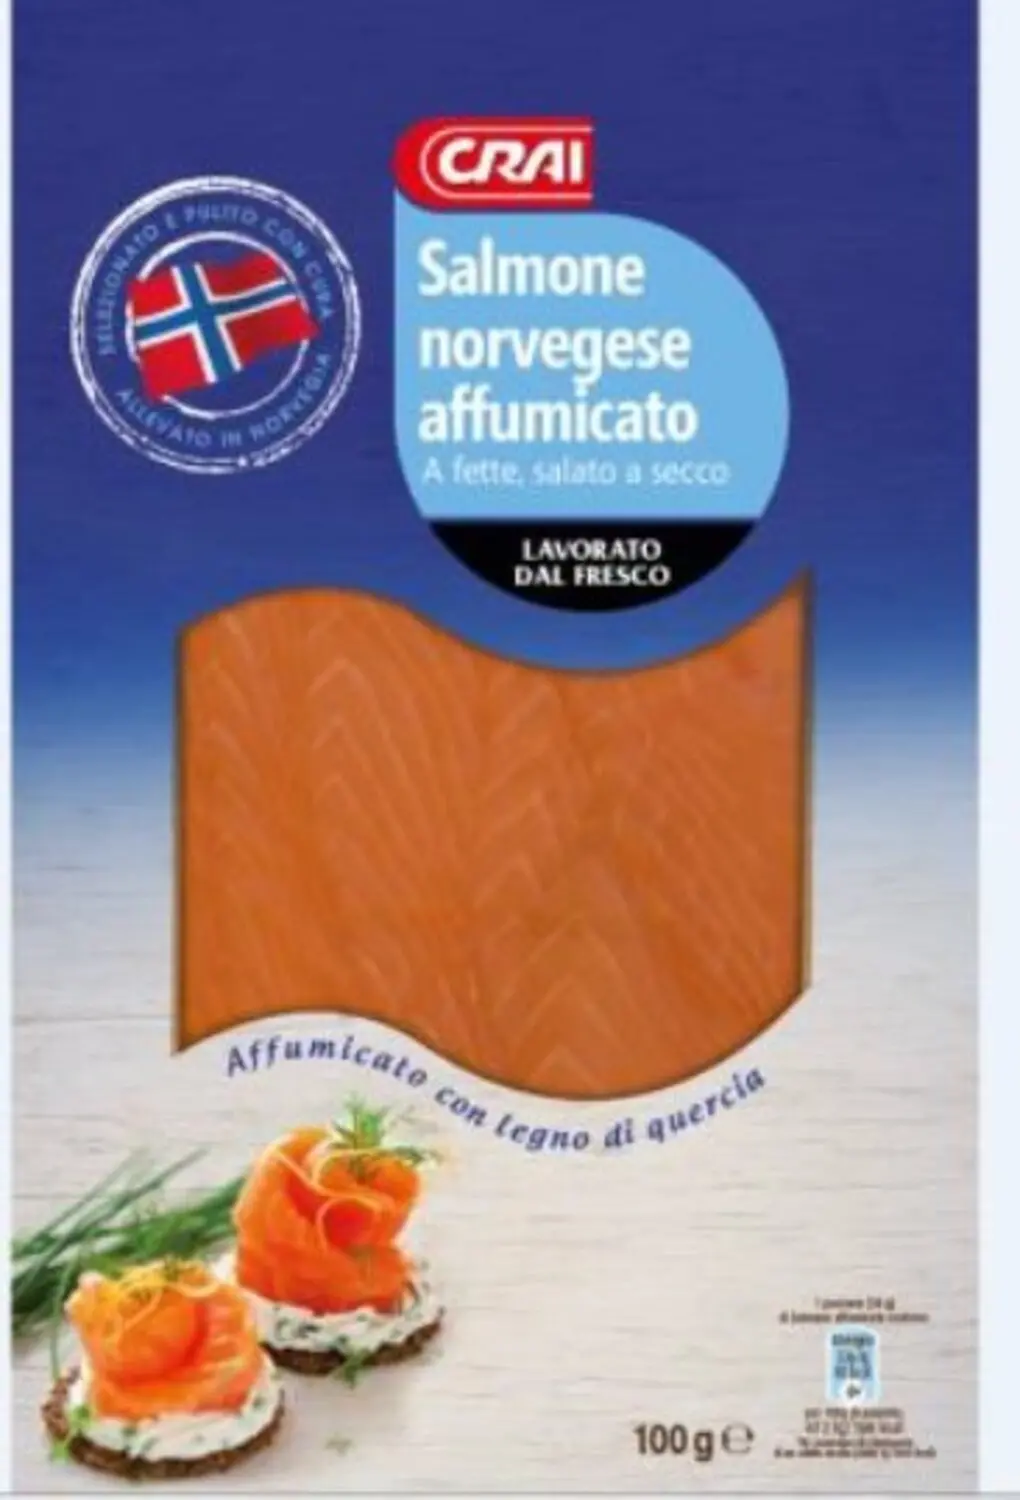 Crai Salmone norvegese affumicato A fette 100 g